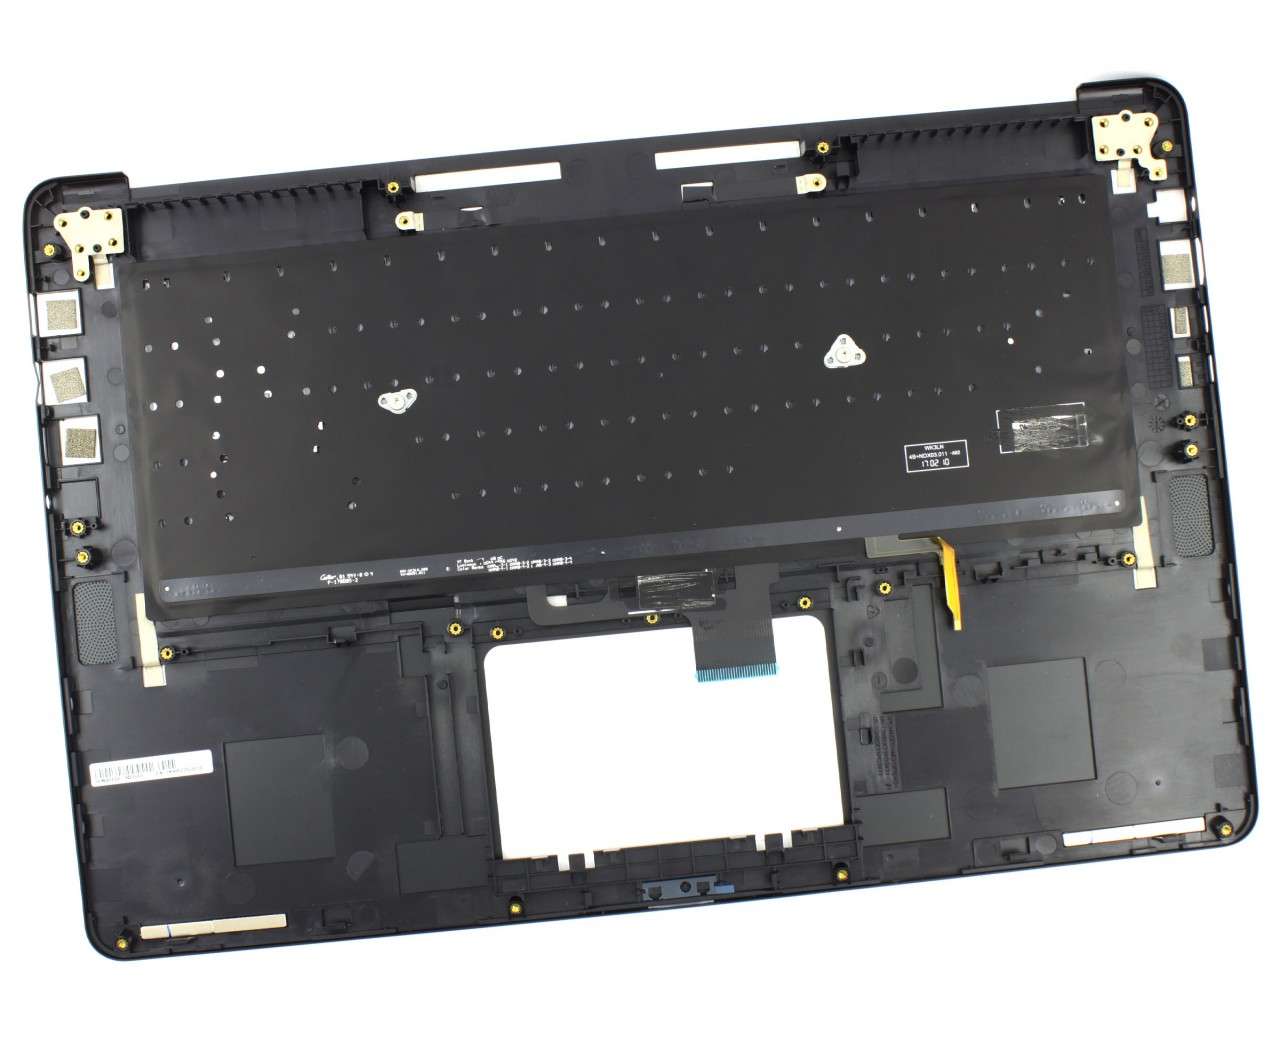 Tastatura Asus UX550VD Neagra cu Palmrest Negru iluminata backlit